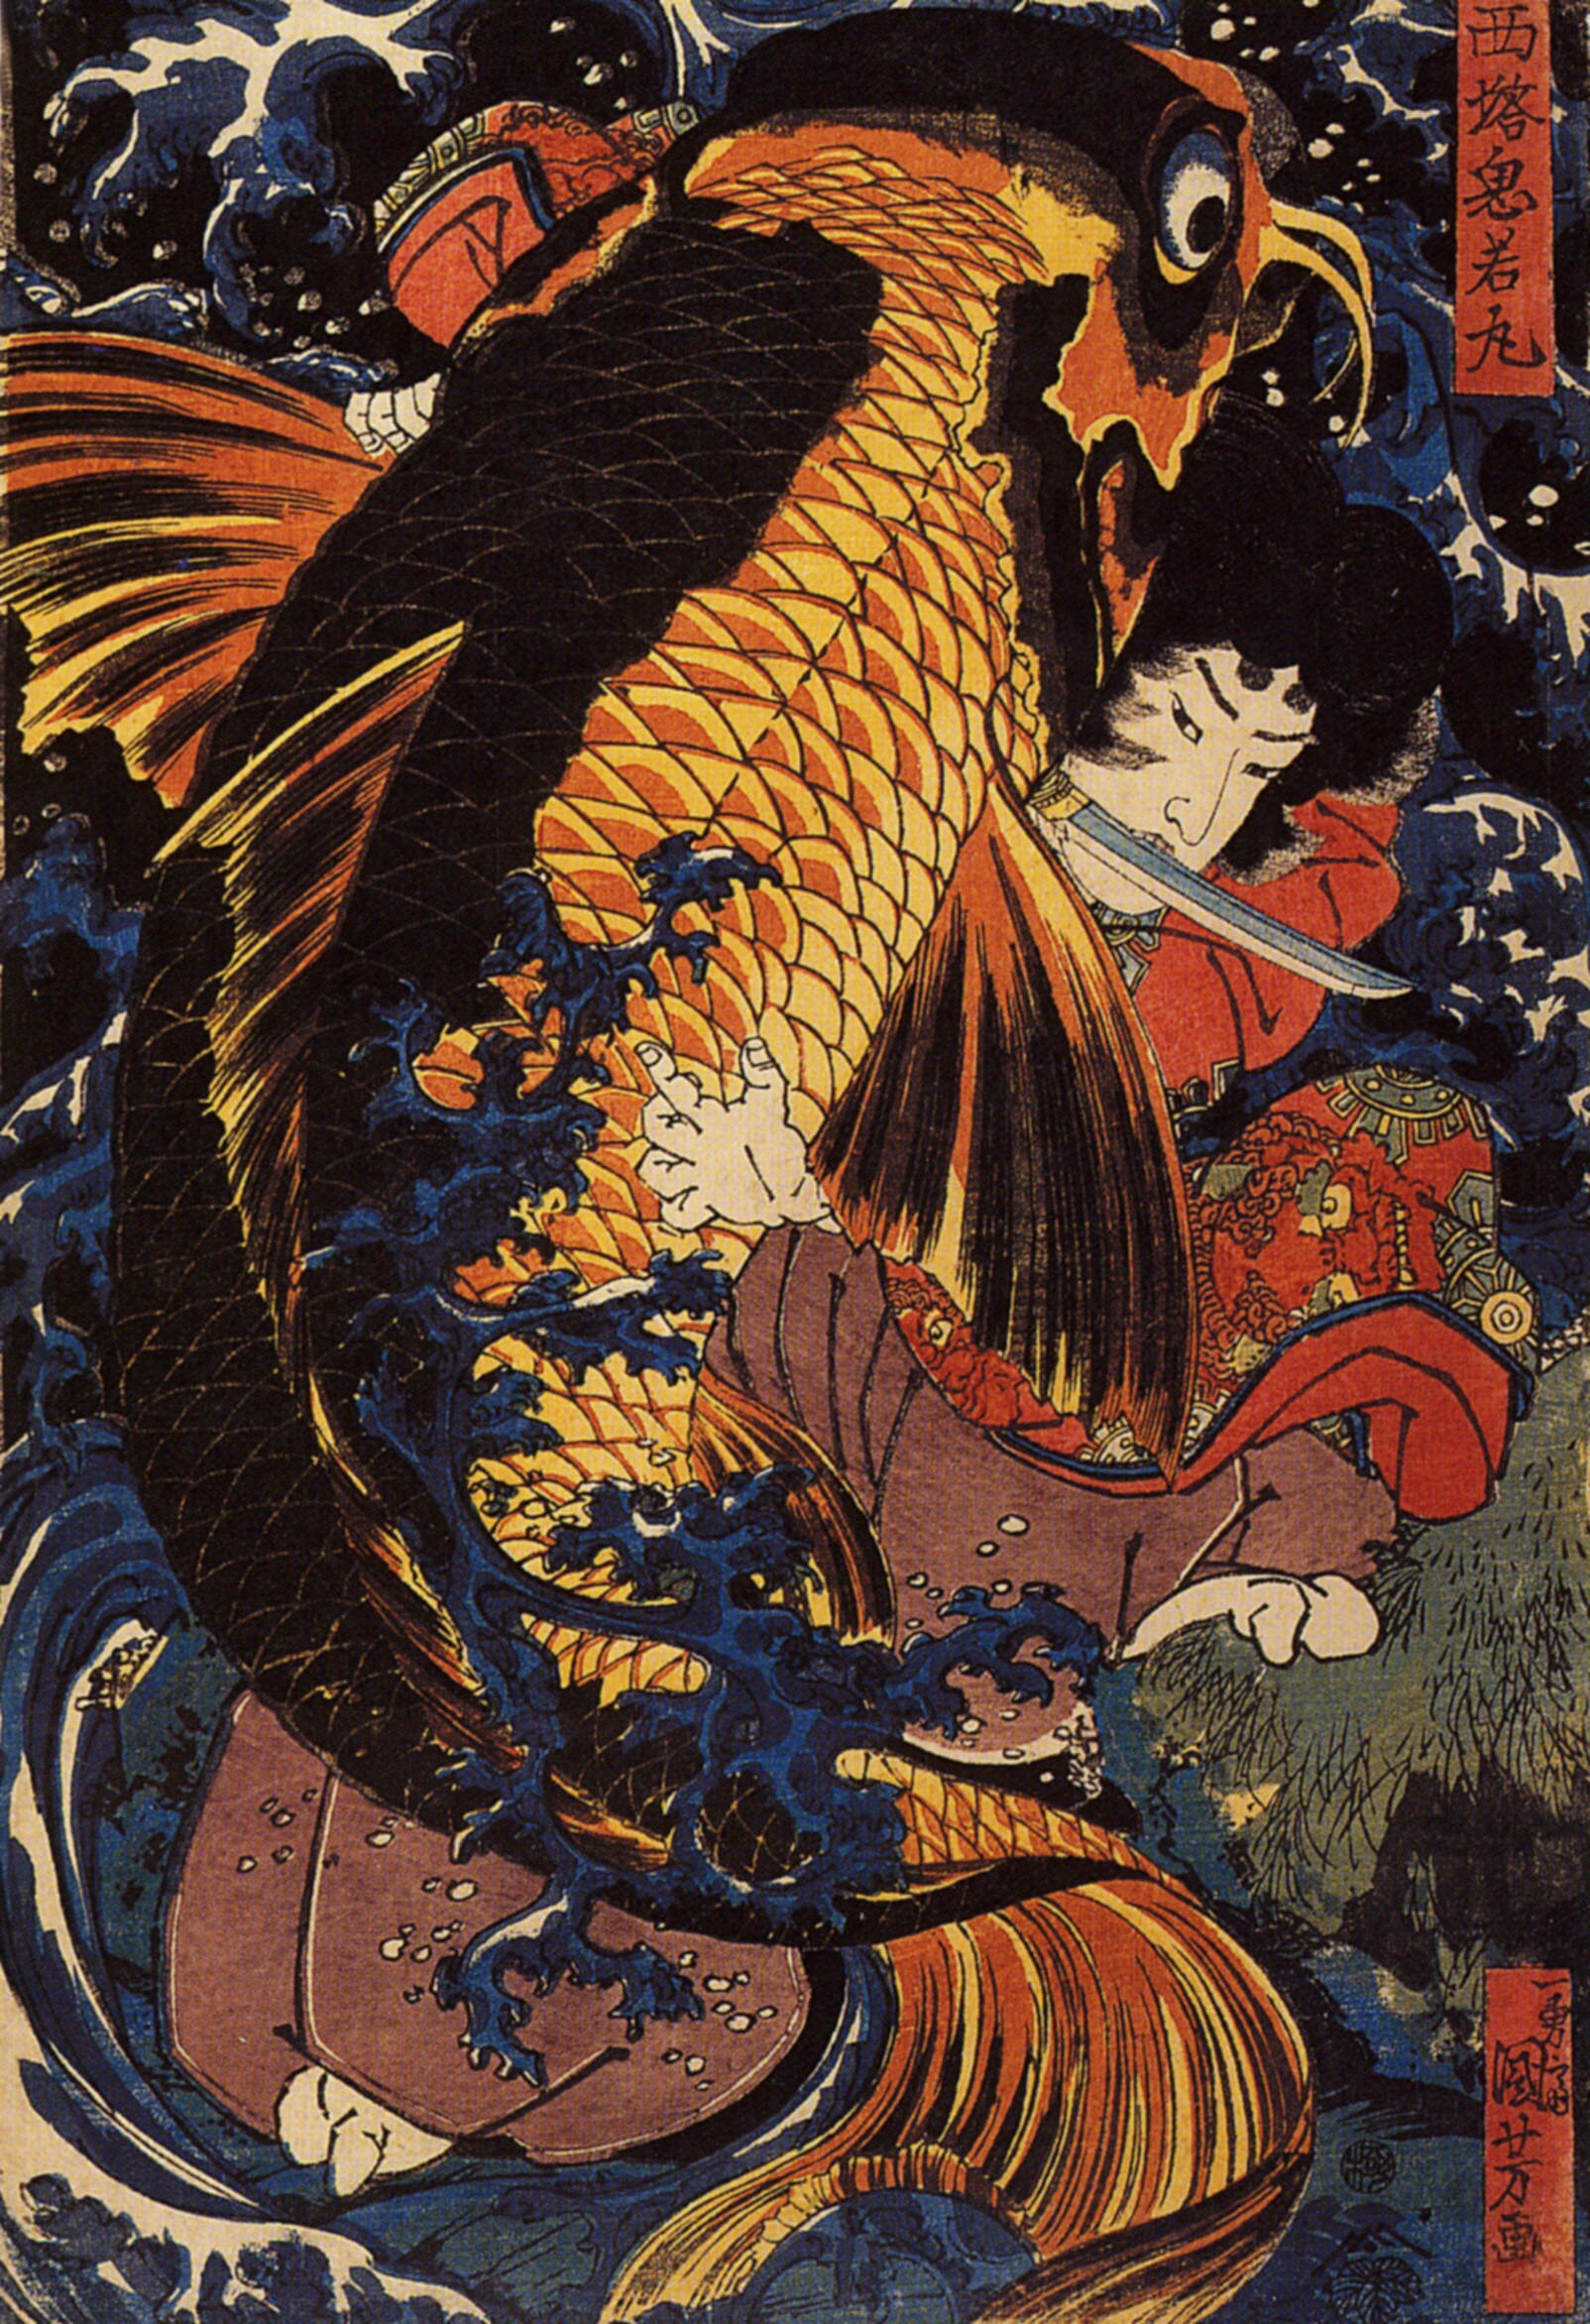 Utagawa Kuniyoshi - January 1, 1798 - April 14, 1861